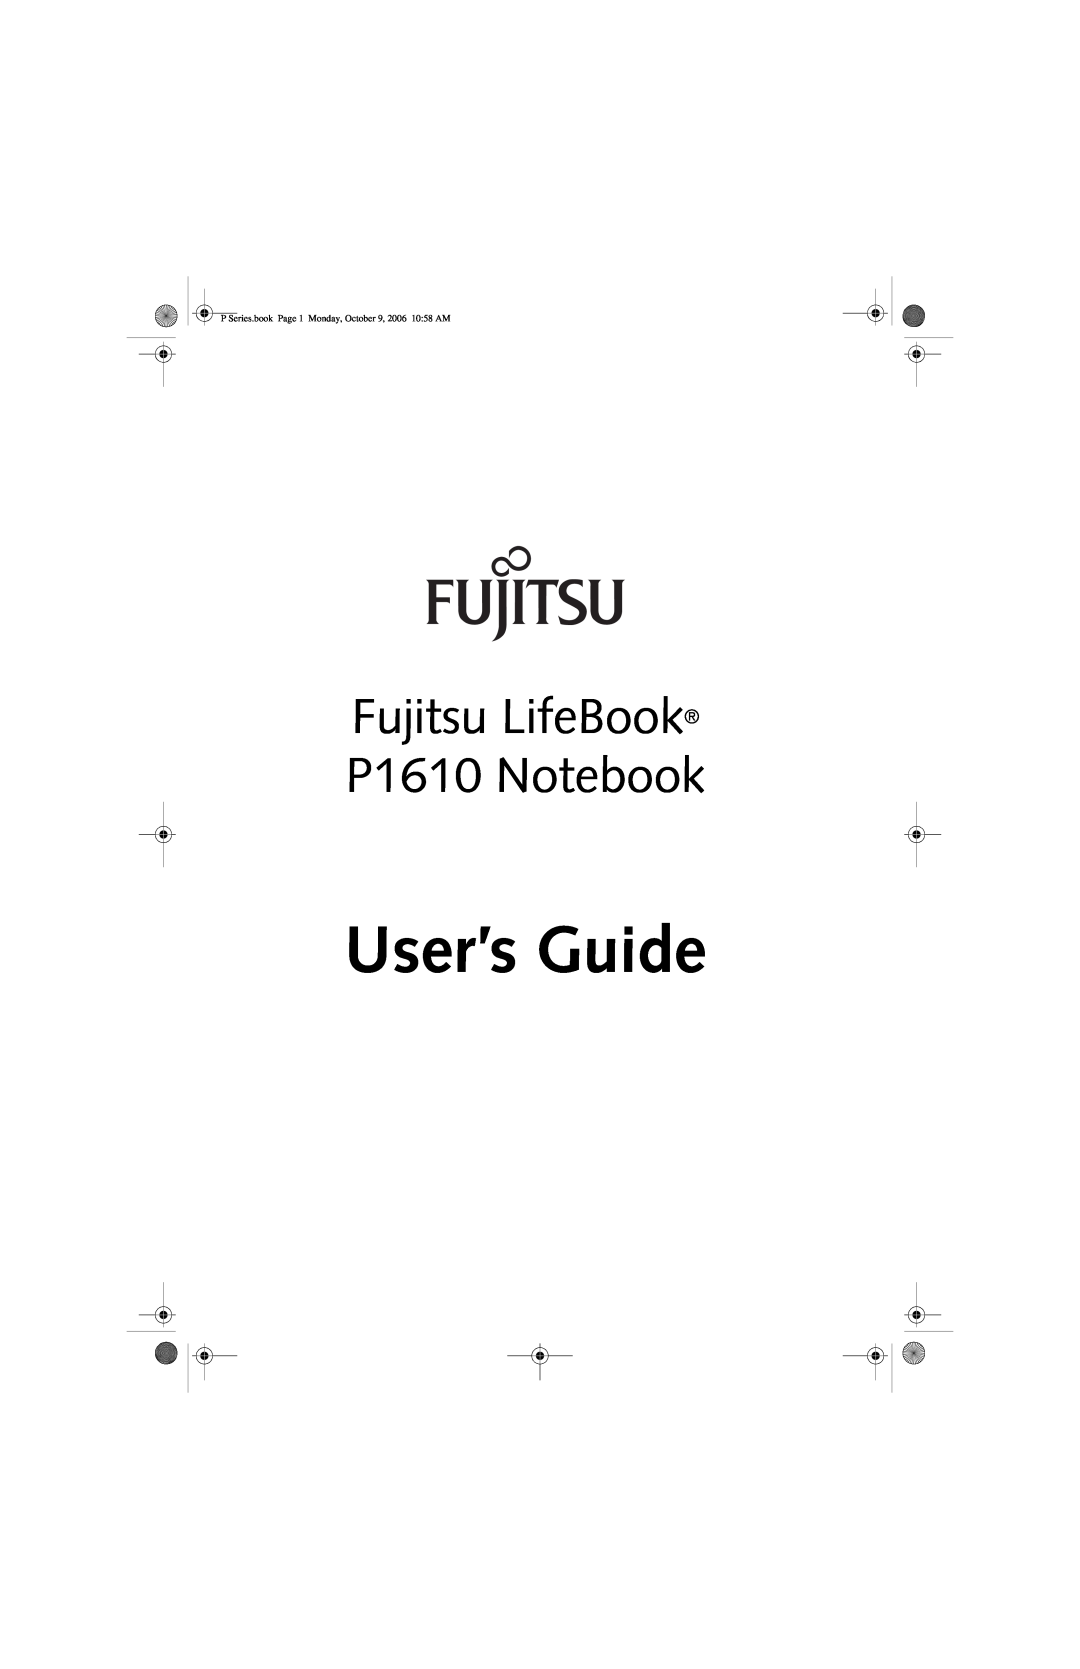 Fujitsu manual User’s Guide, Fujitsu LifeBook P1610 Notebook 